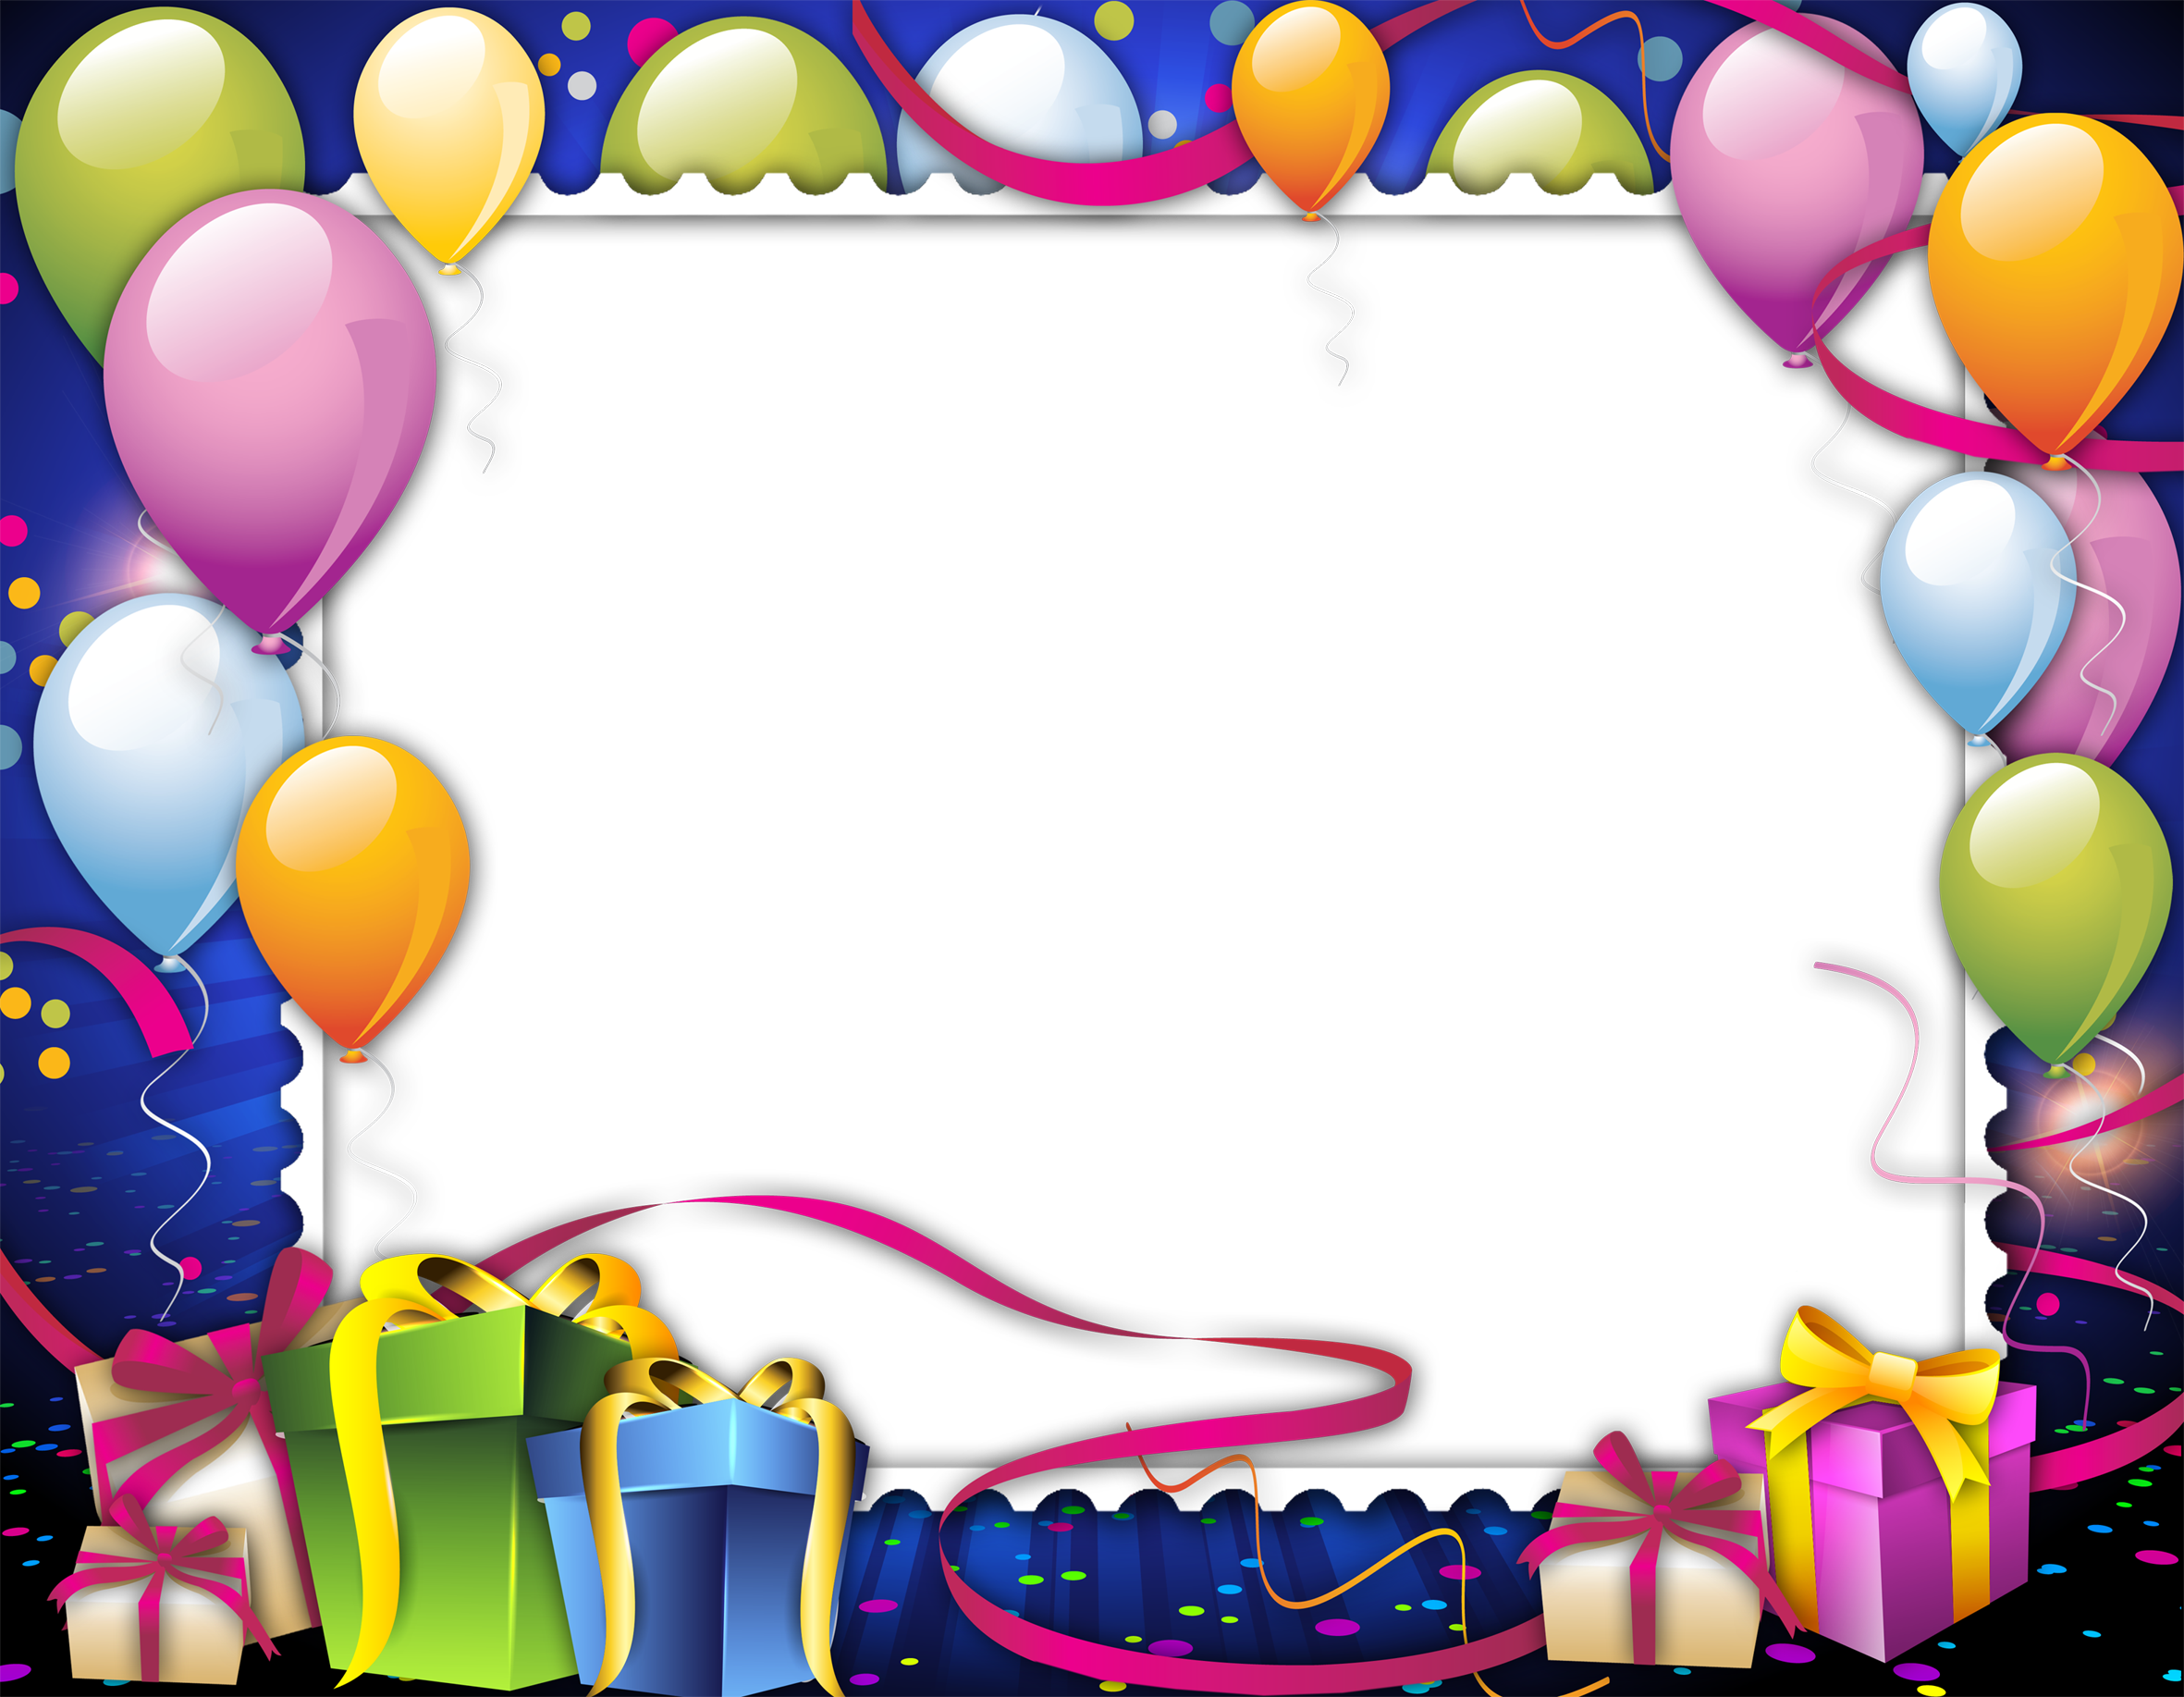 Birthday Frame png image free download